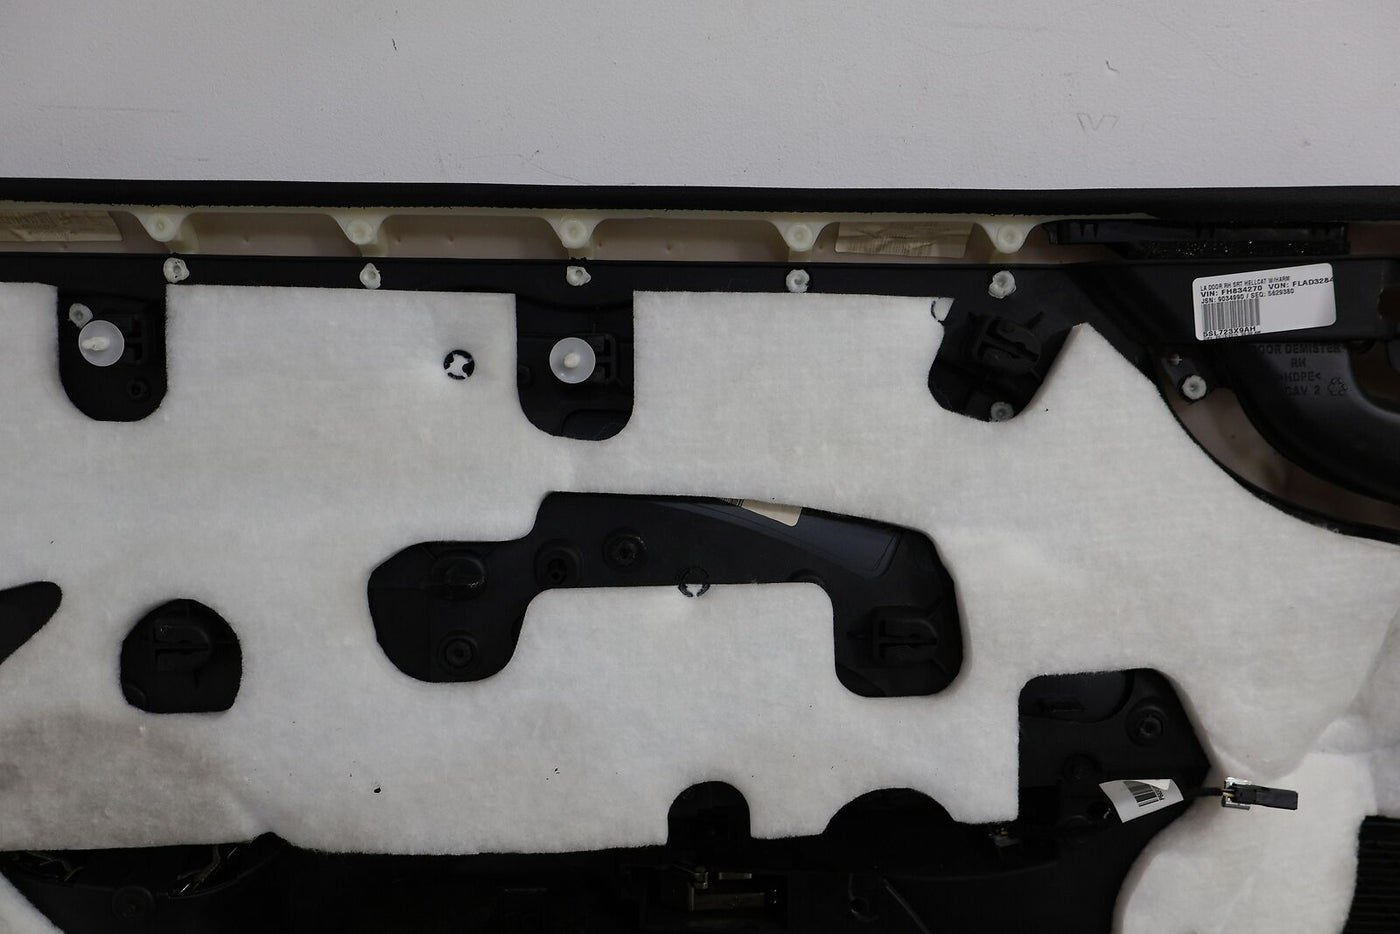 15-18 Dodge Challenger SRT Hellcat Right RH Door Trim Panel (Black X9) Leather